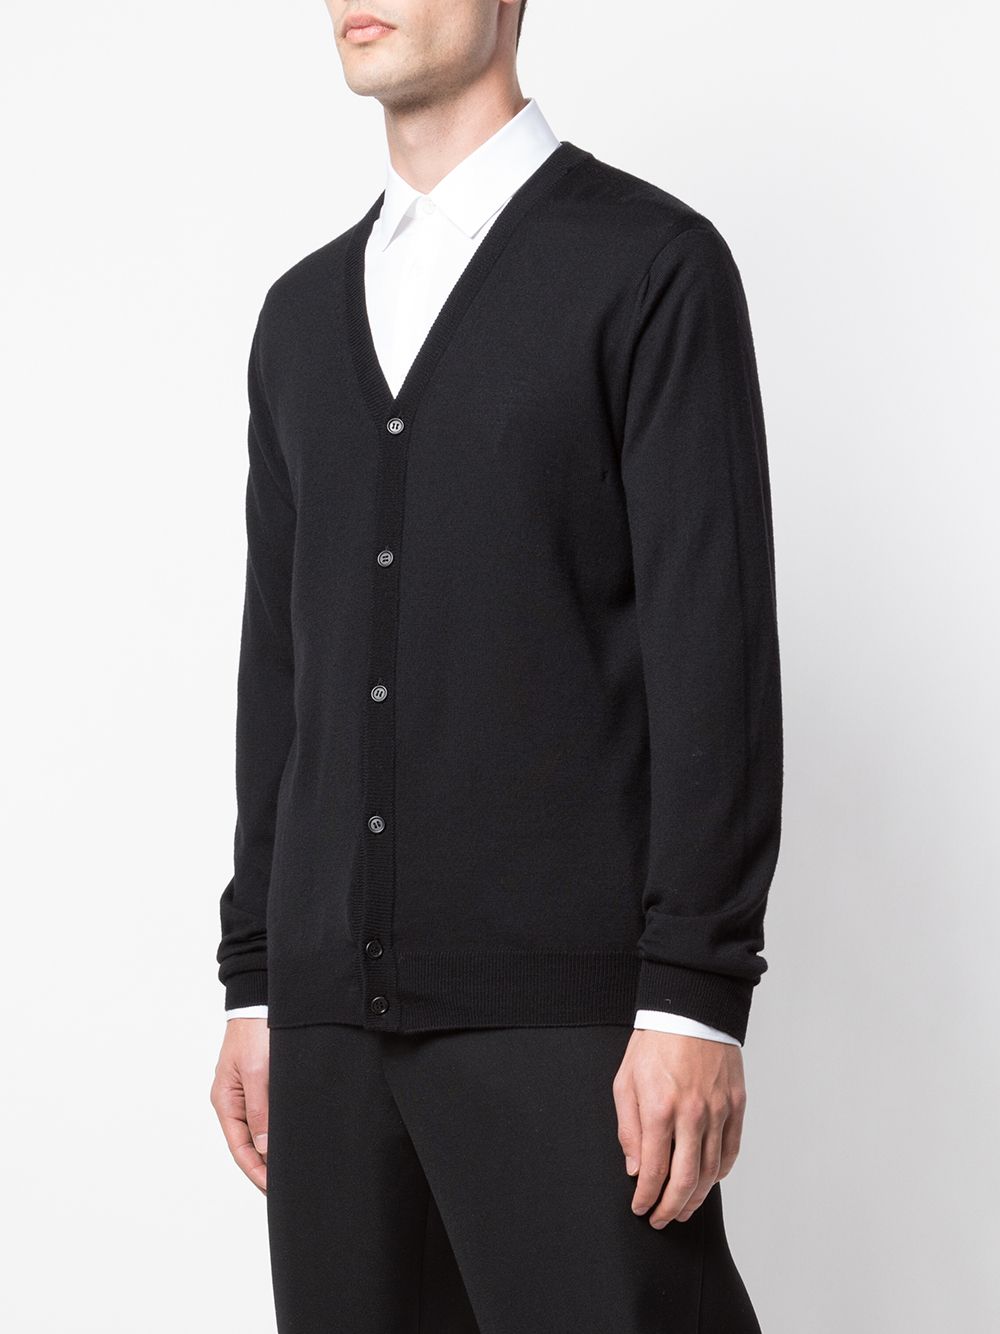  Wardrobe.nyc X The Woolmark Company Release 05 Knitted Cardigan - Black 